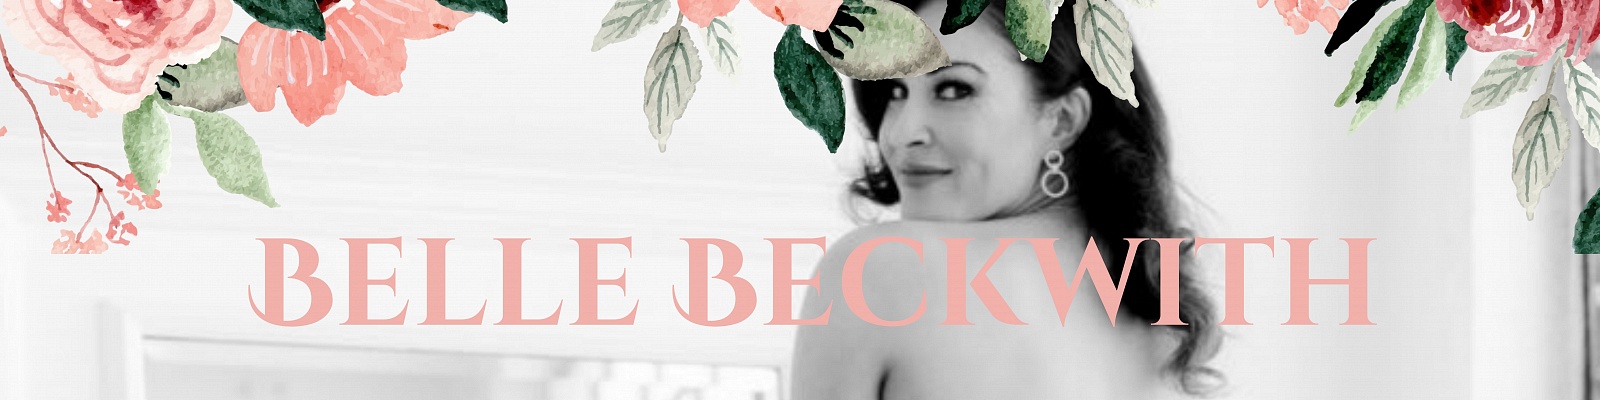 Belle Beckwith Escort